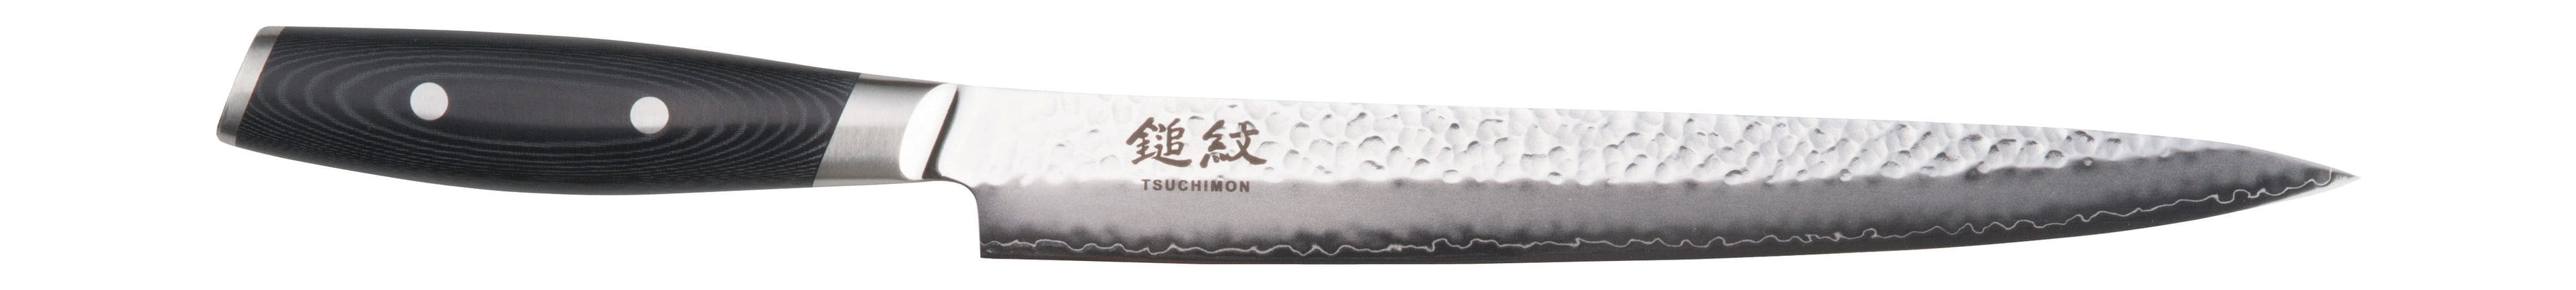 Yaxell Tsuchimon Carving Knife, 25.5 Cm